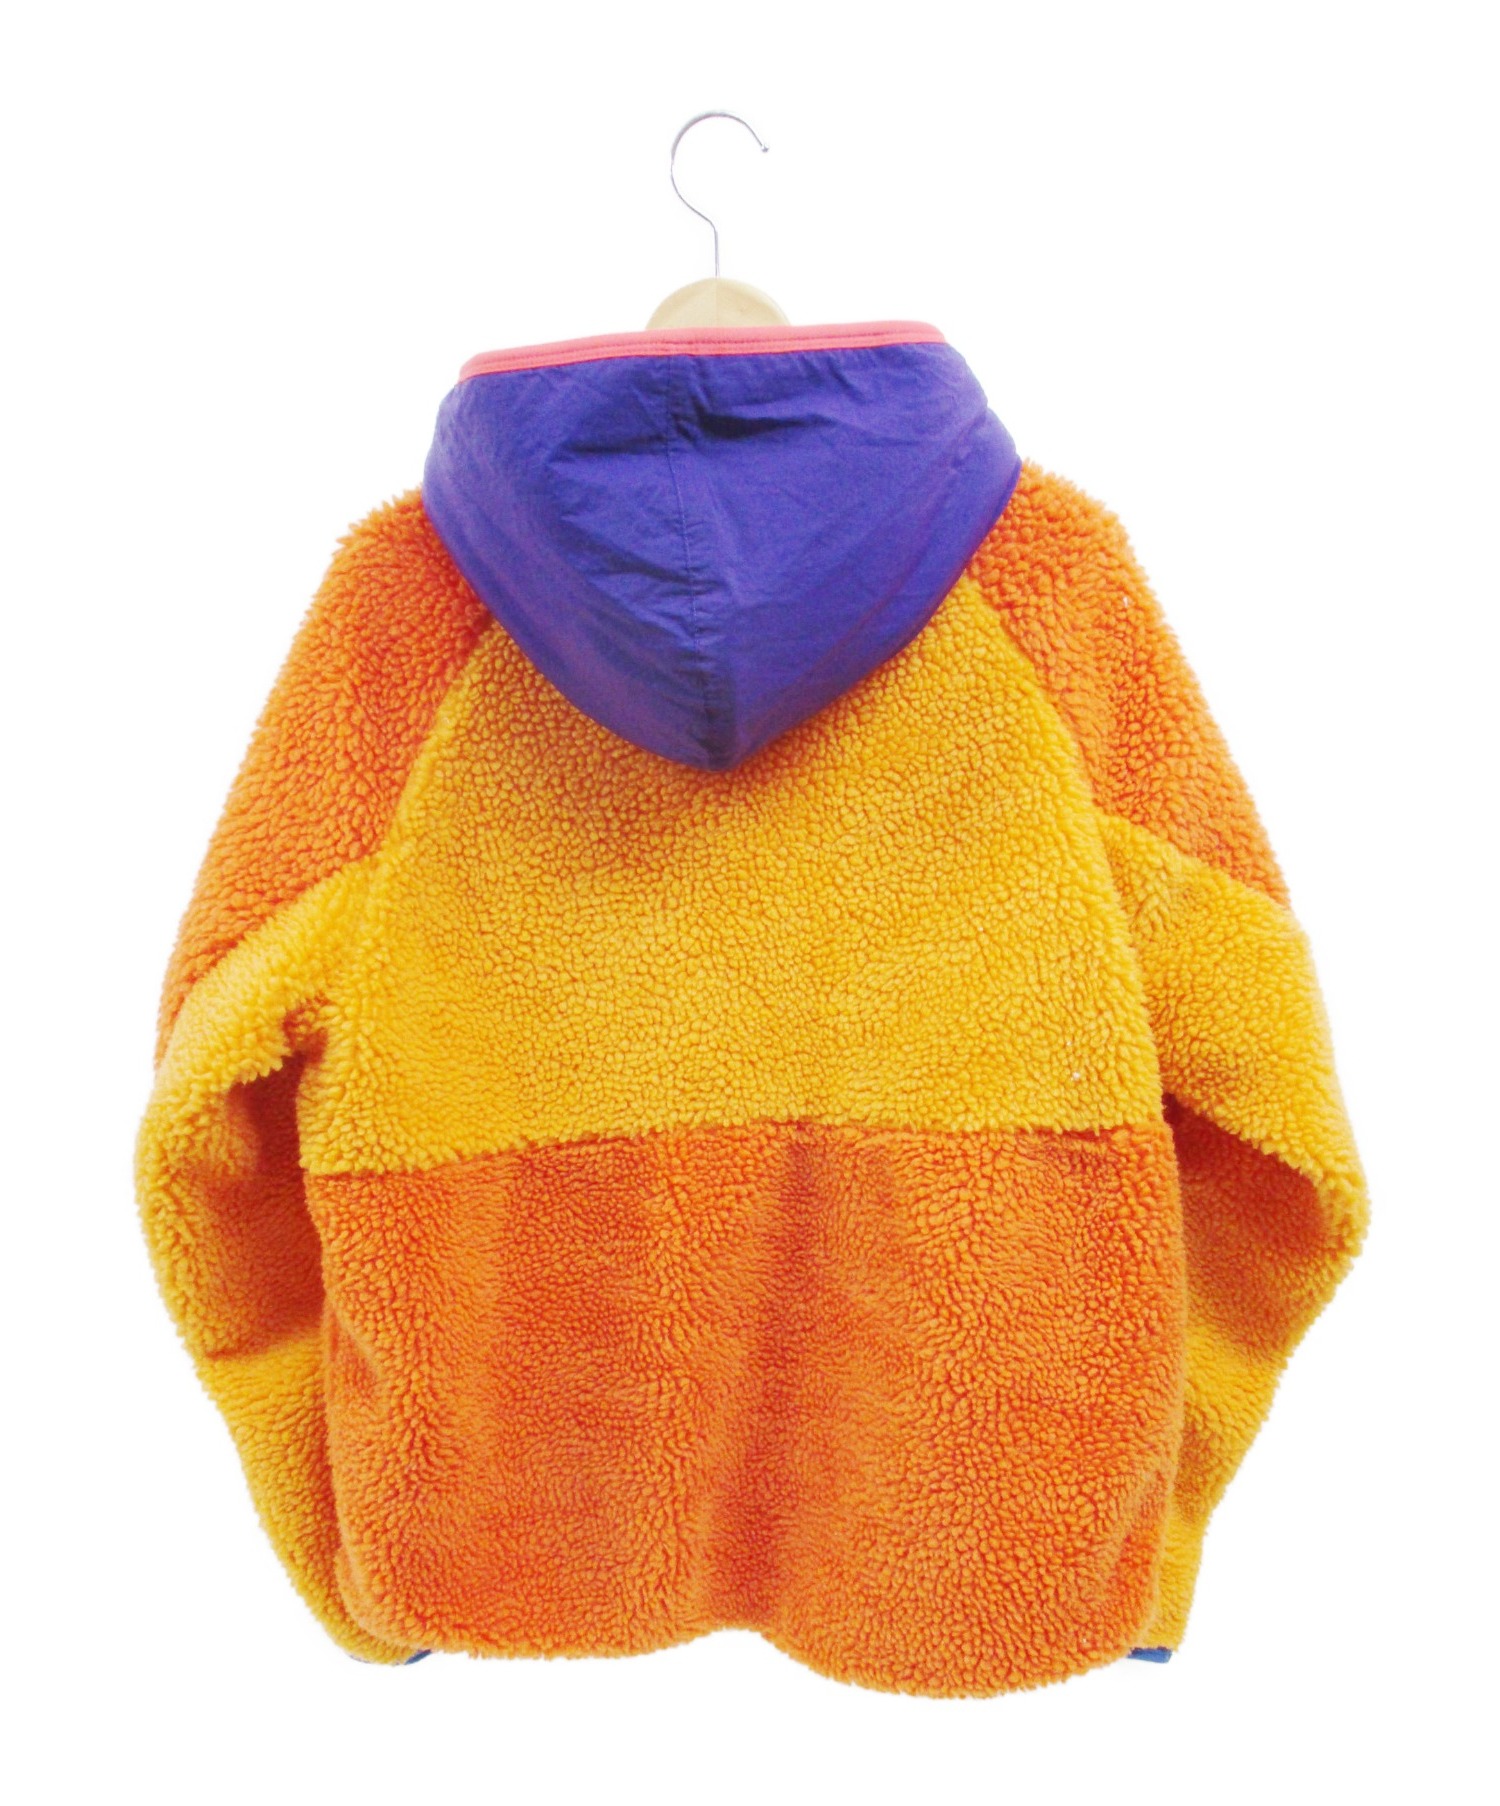 NIKE (ナイキ) フリースジャケット オレンジ×パープル サイズ:M